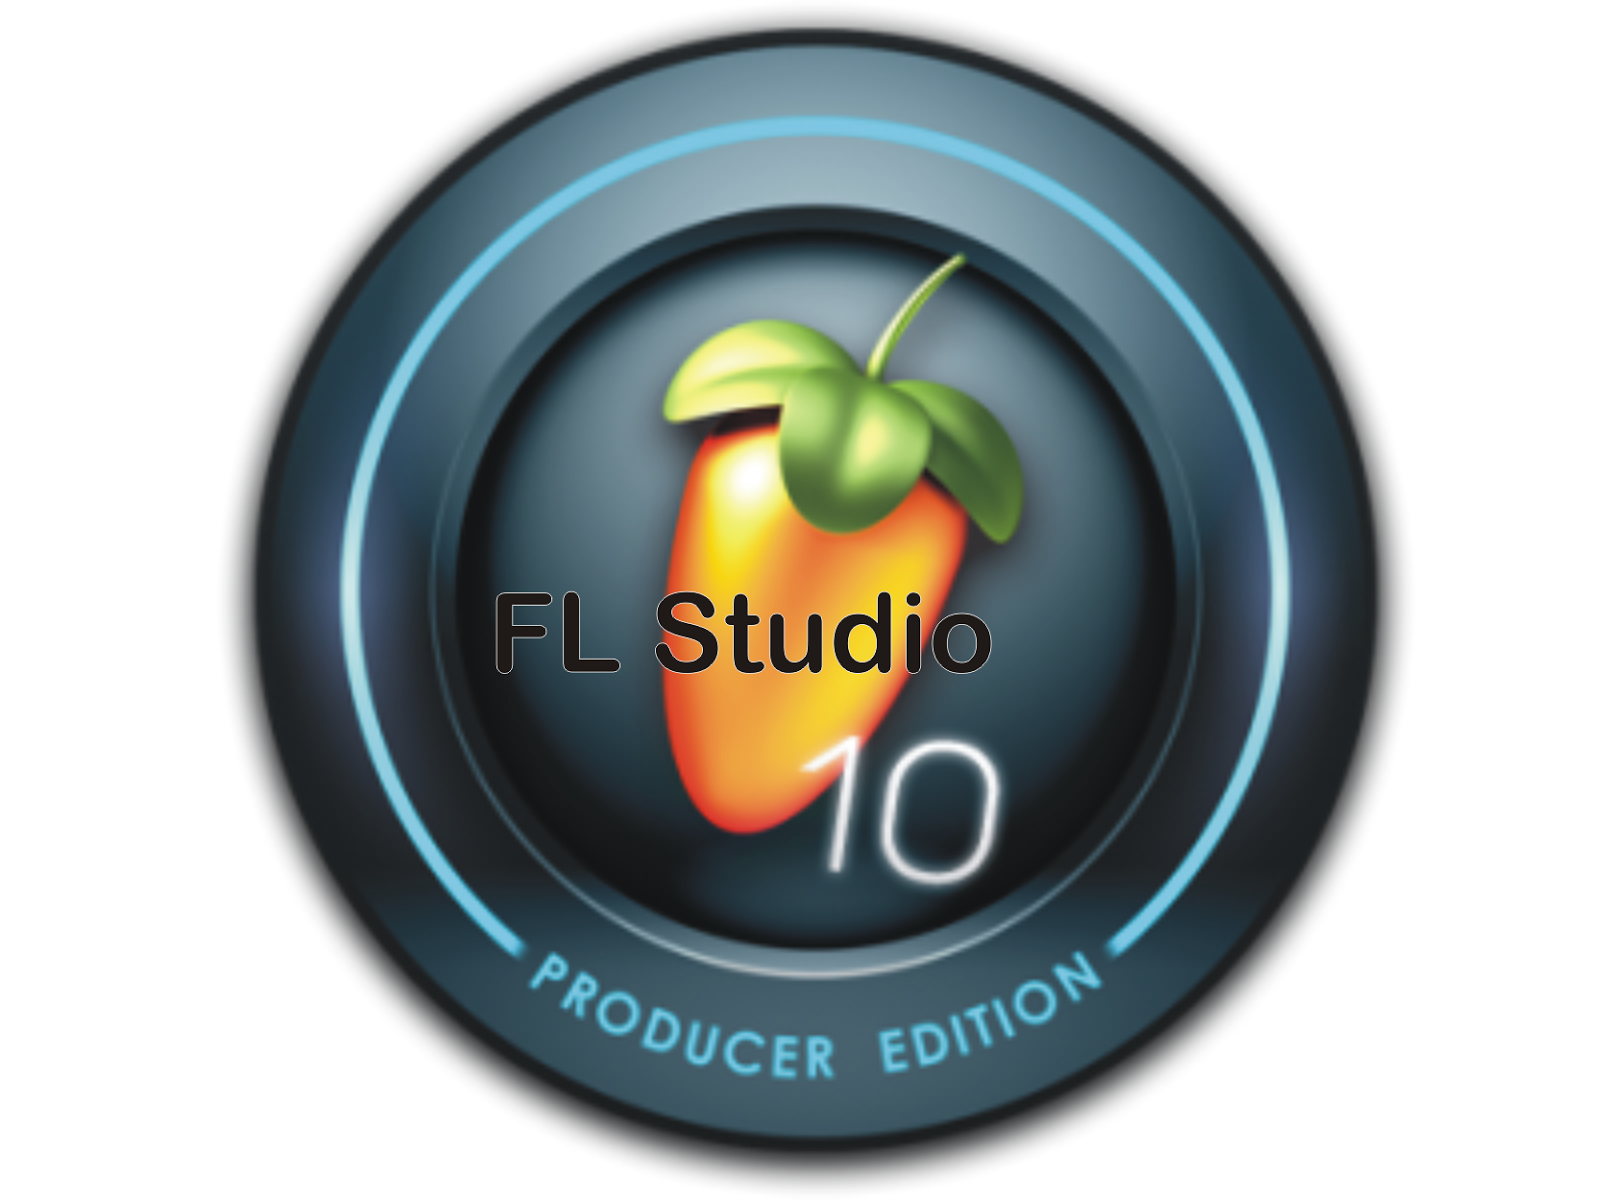 Fl studio 4pda. Фл студио на студии. Значок FL Studio 20. FL Studio картинки. Значок FL Studio без фона.